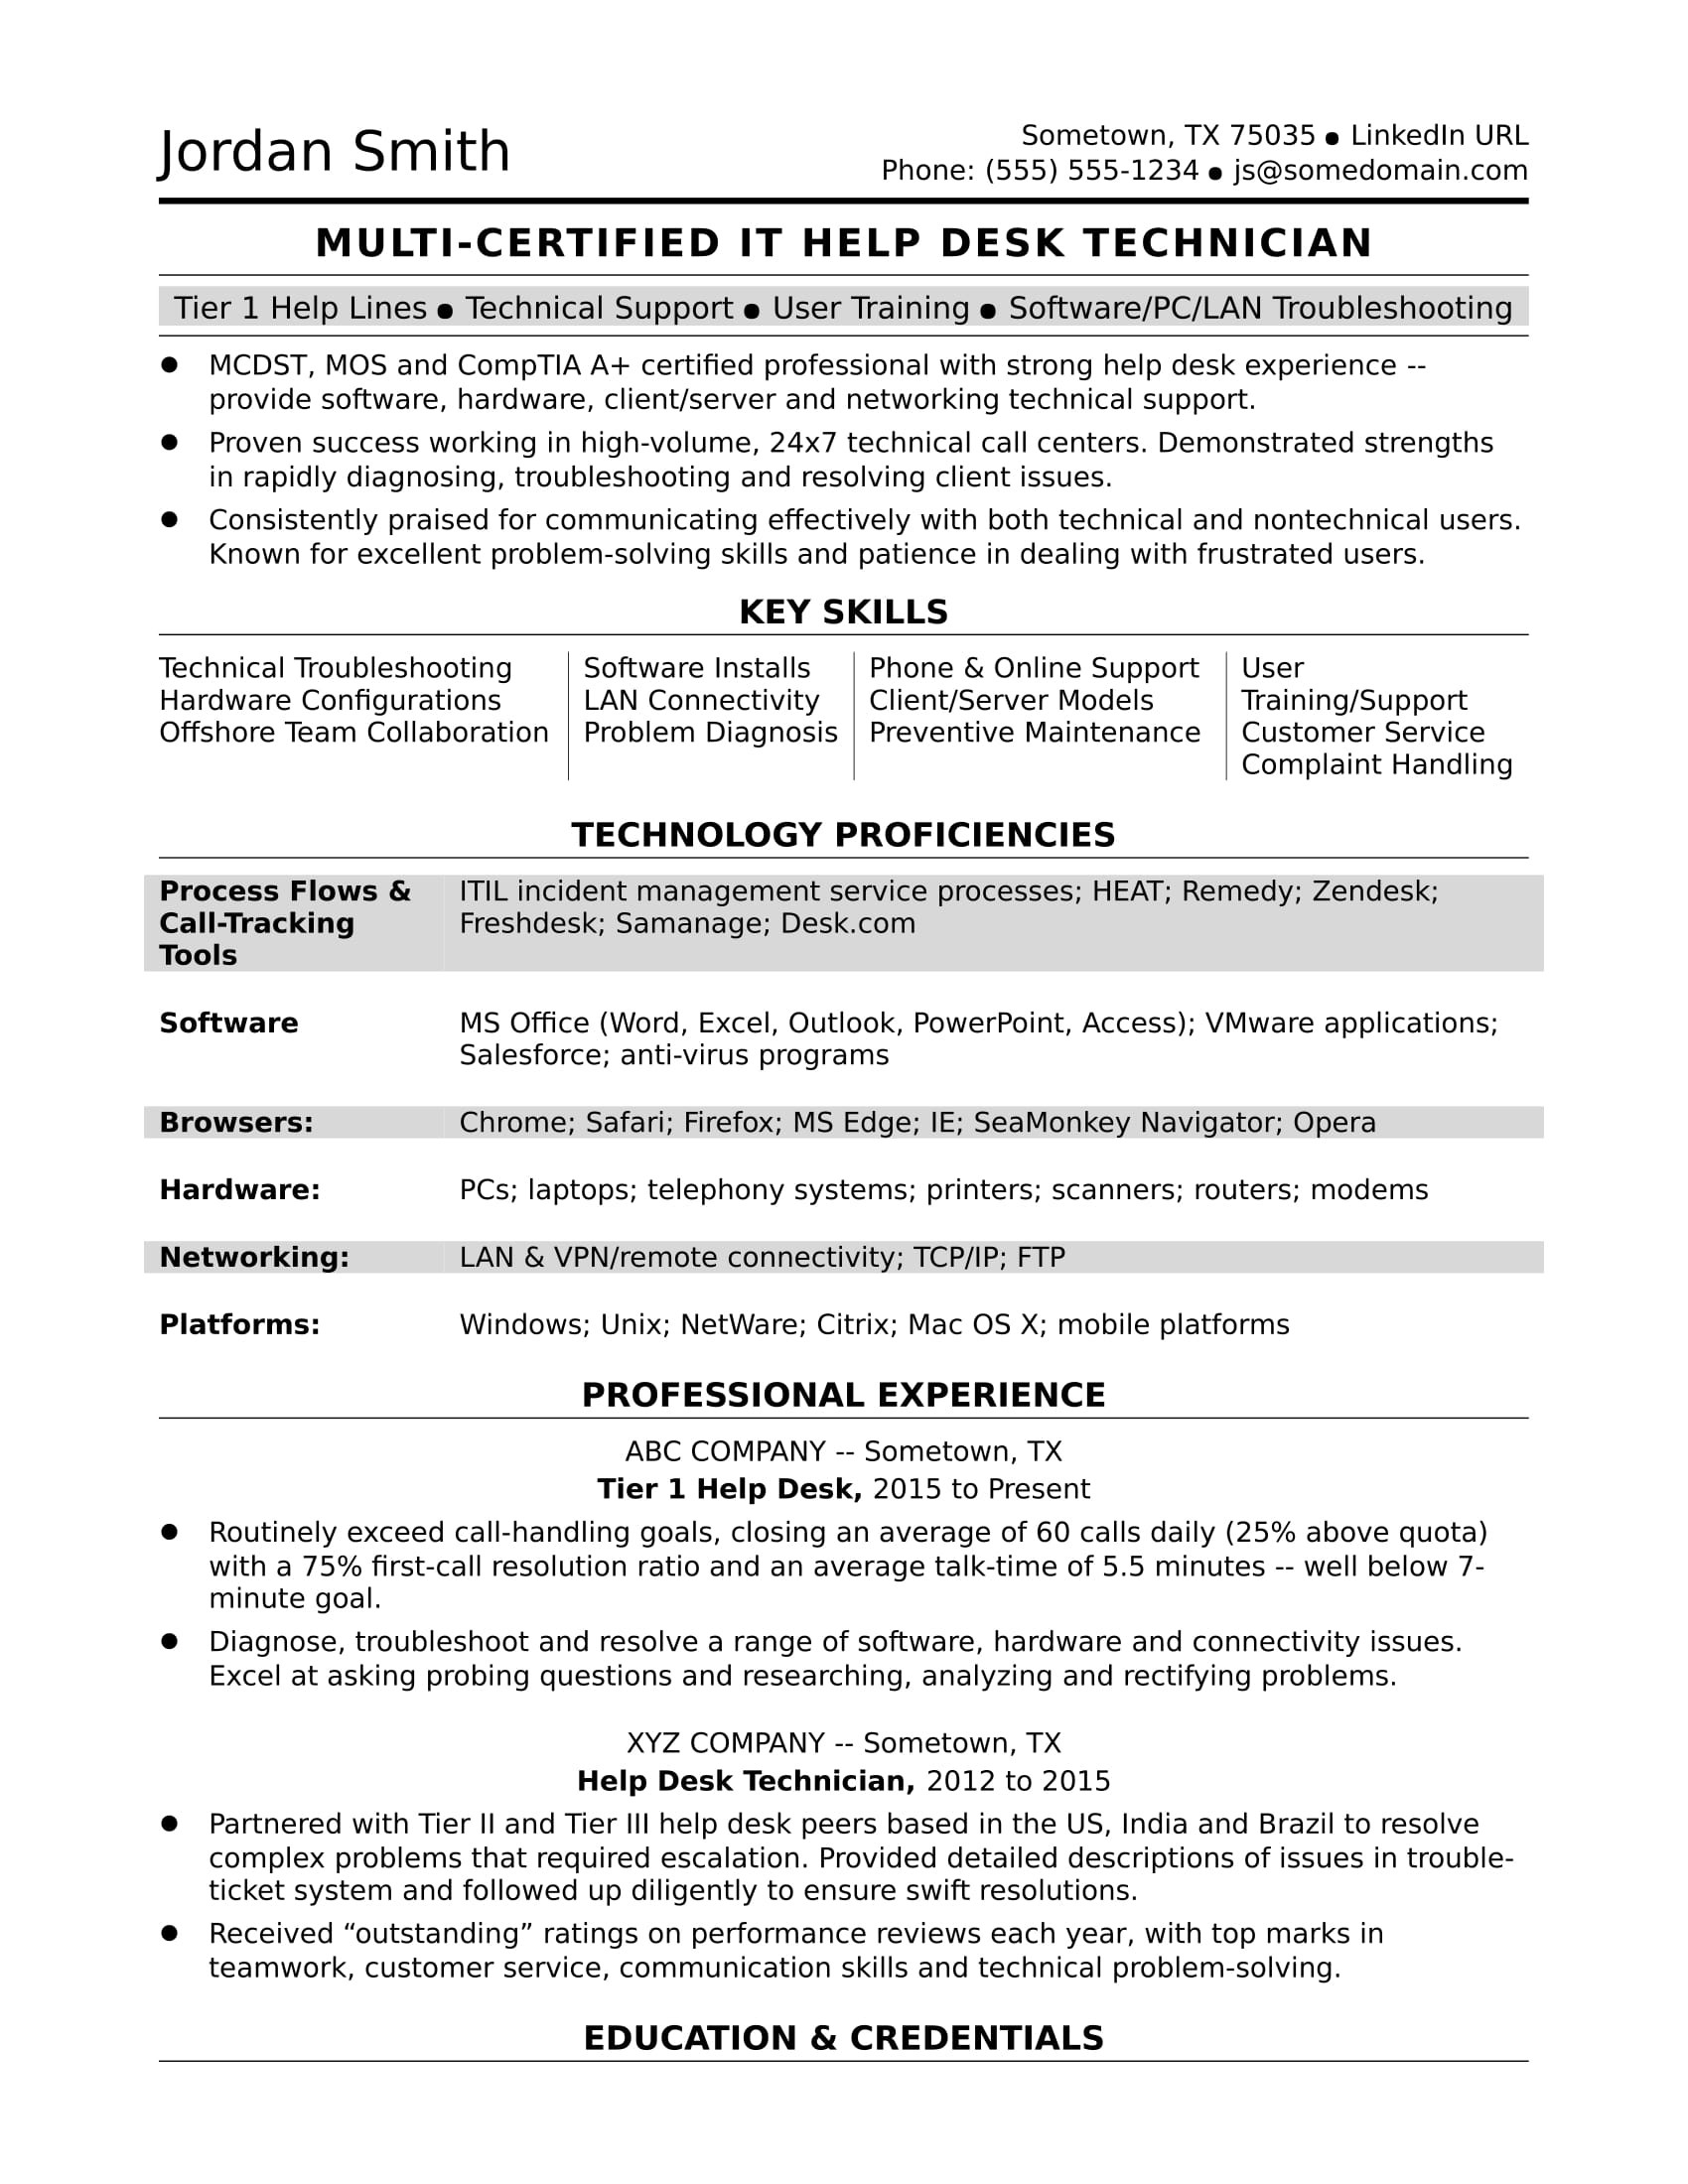 Sample Skills and Interest In Resume Sample Resume for A Midlevel It Help Desk Professional Monster.com